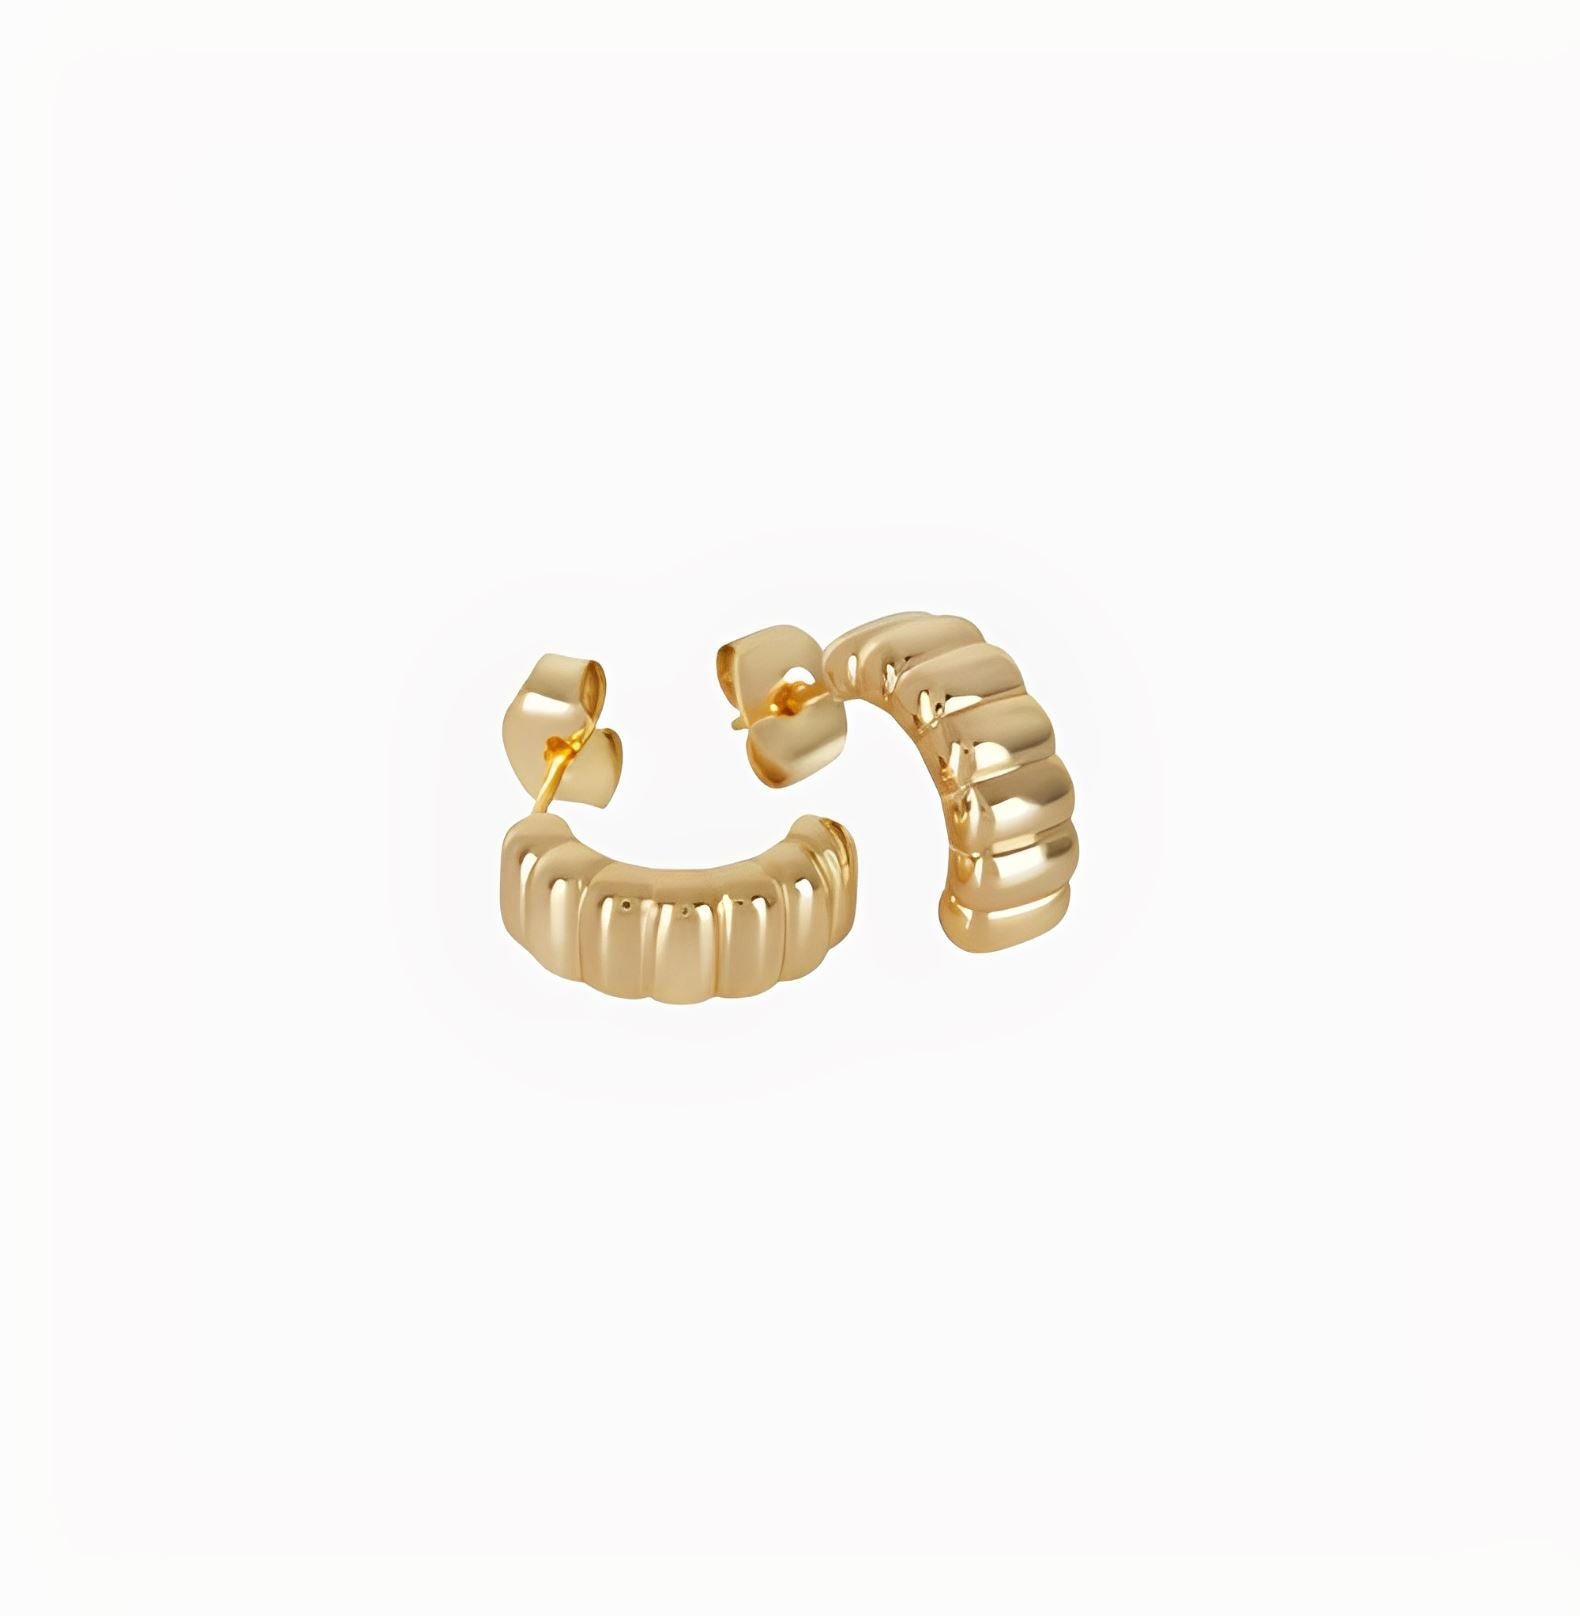 NOLA HOOP EARRINGS braclet Yubama Jewelry Online Store - The Elegant Designs of Gold and Silver ! 